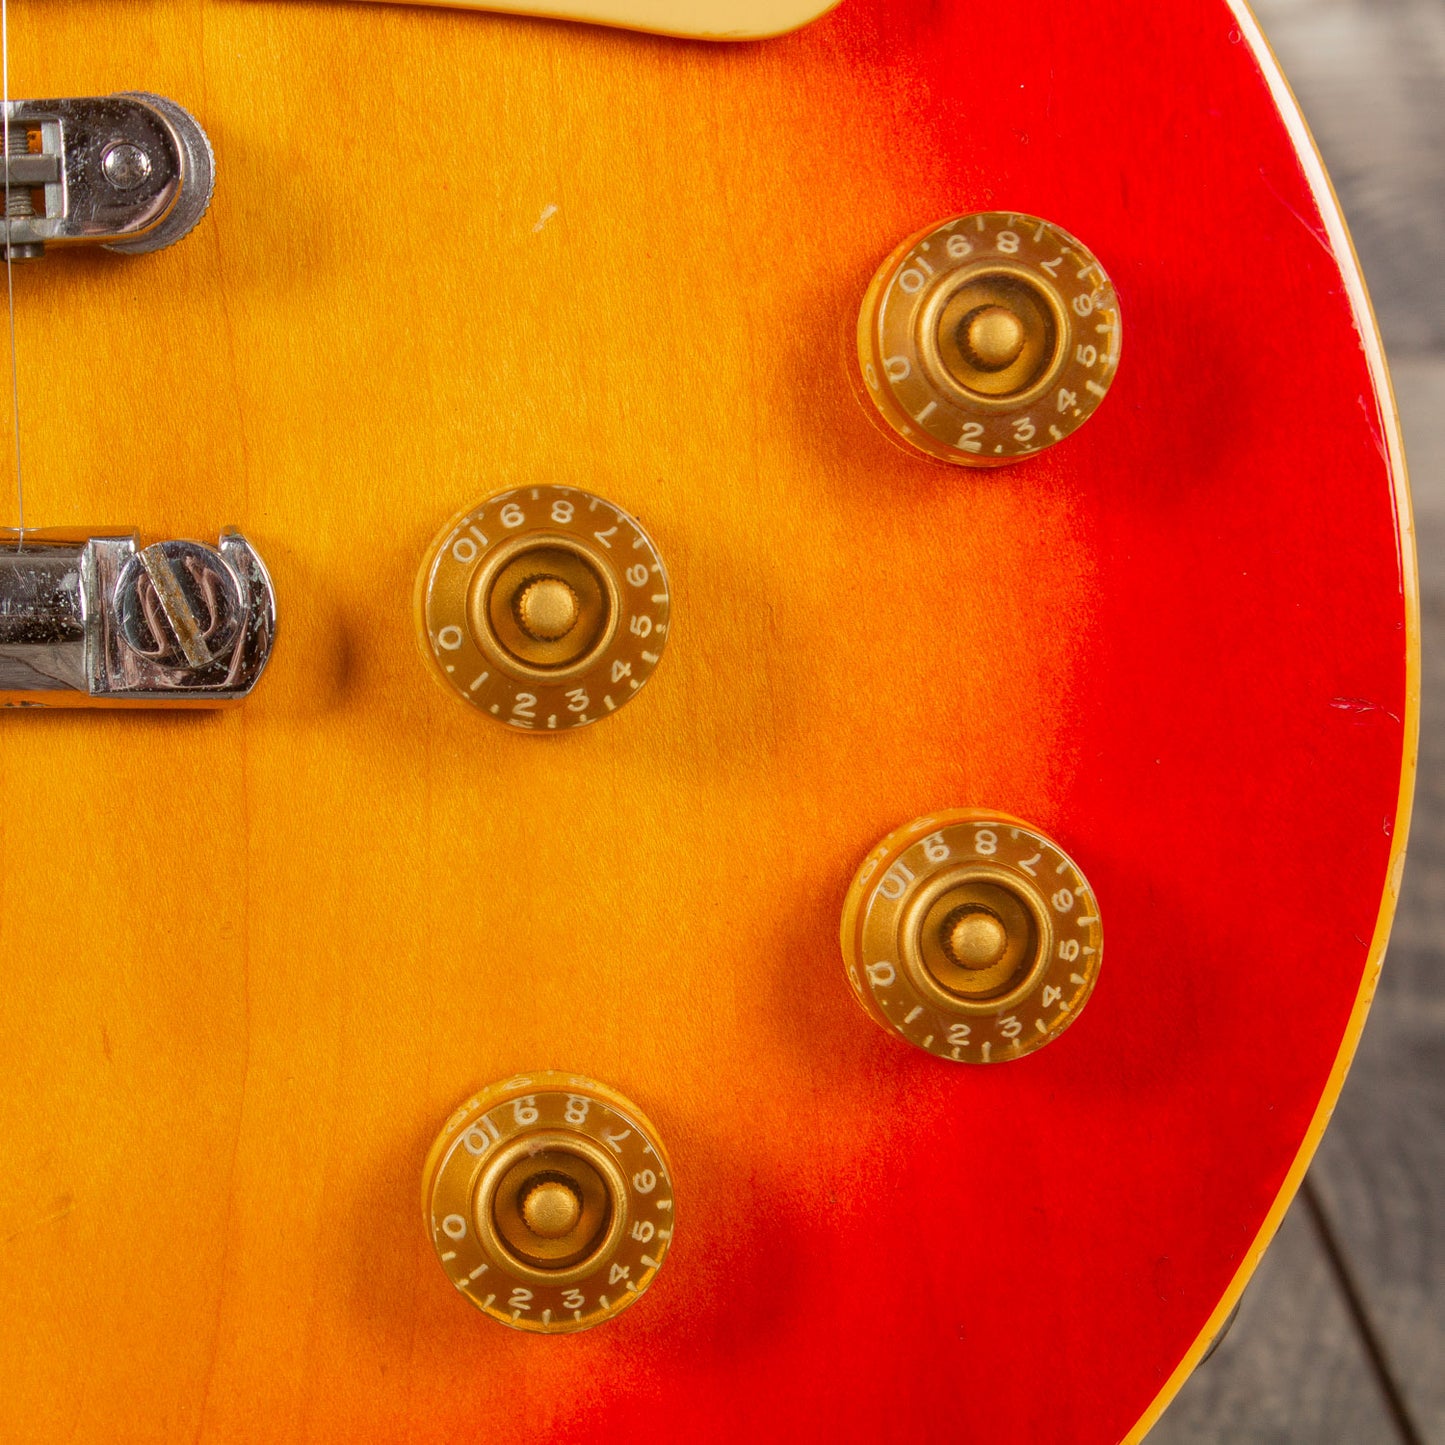 1980 Gibson Les Paul Standard